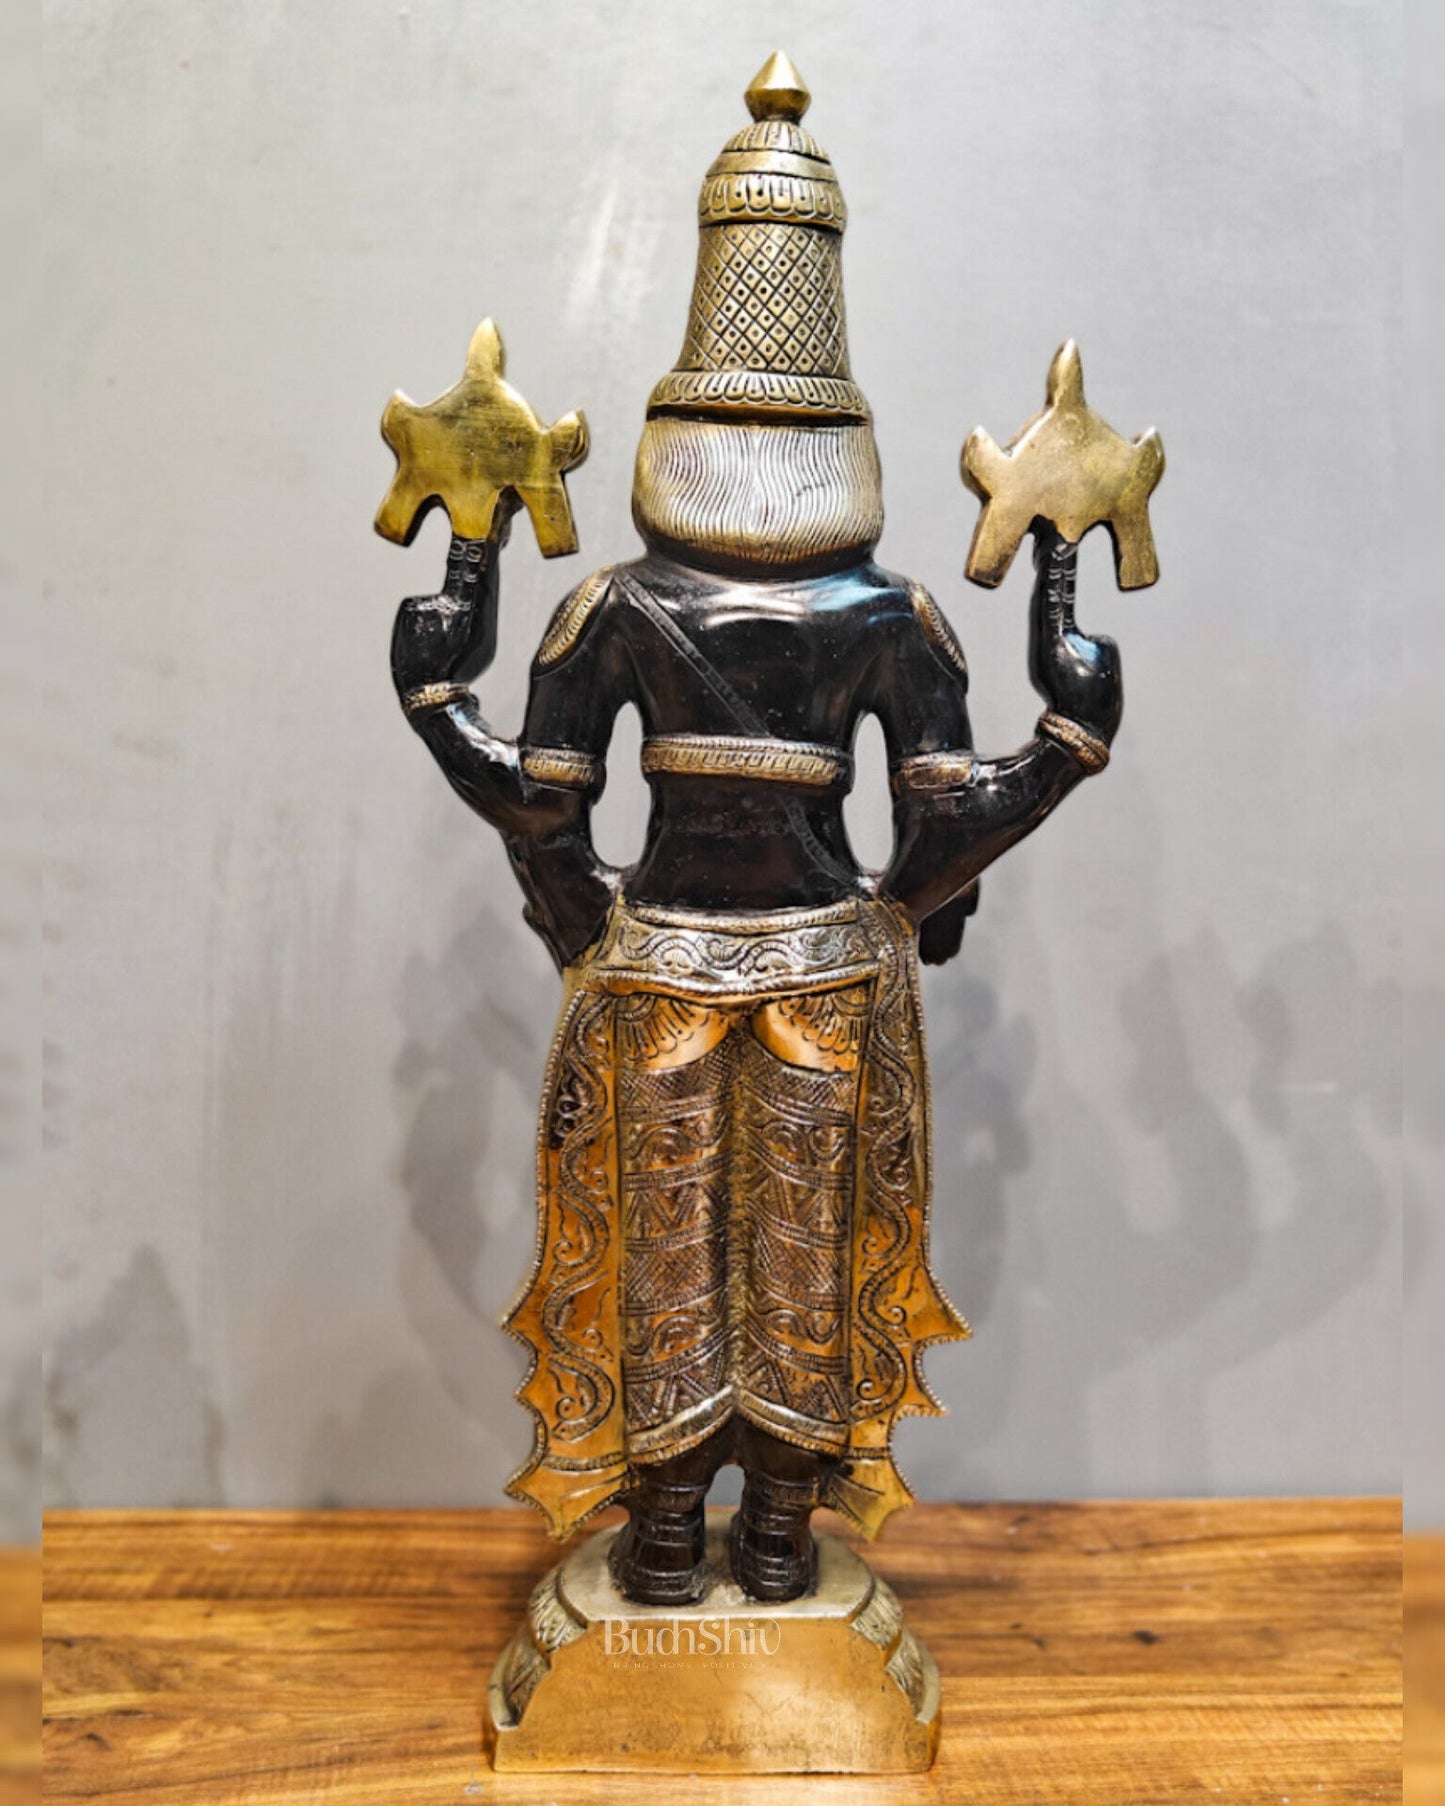 Brass Tirupati Balaji Lord Venkateshwara Statue 24" - Budhshiv.com